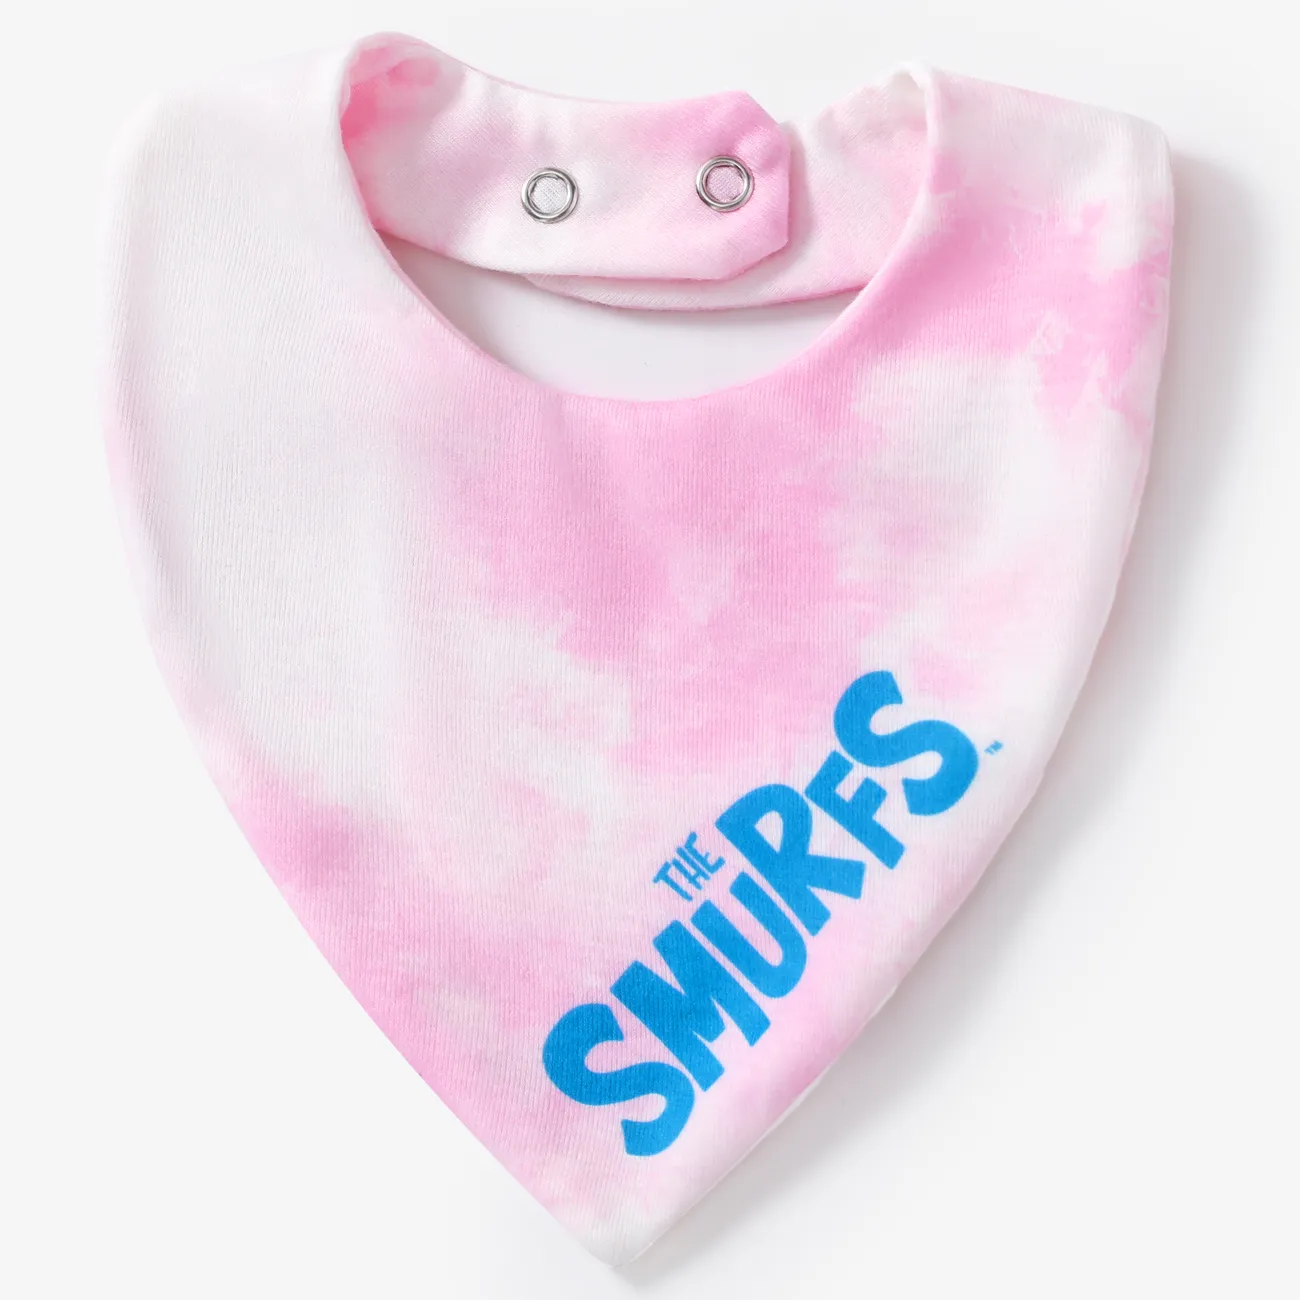 The Smurfs Baby Boys/Girls 2pcs Naia™ Tie-dye fun Character Print Onesie with Saliva Towel Set Pink big image 1